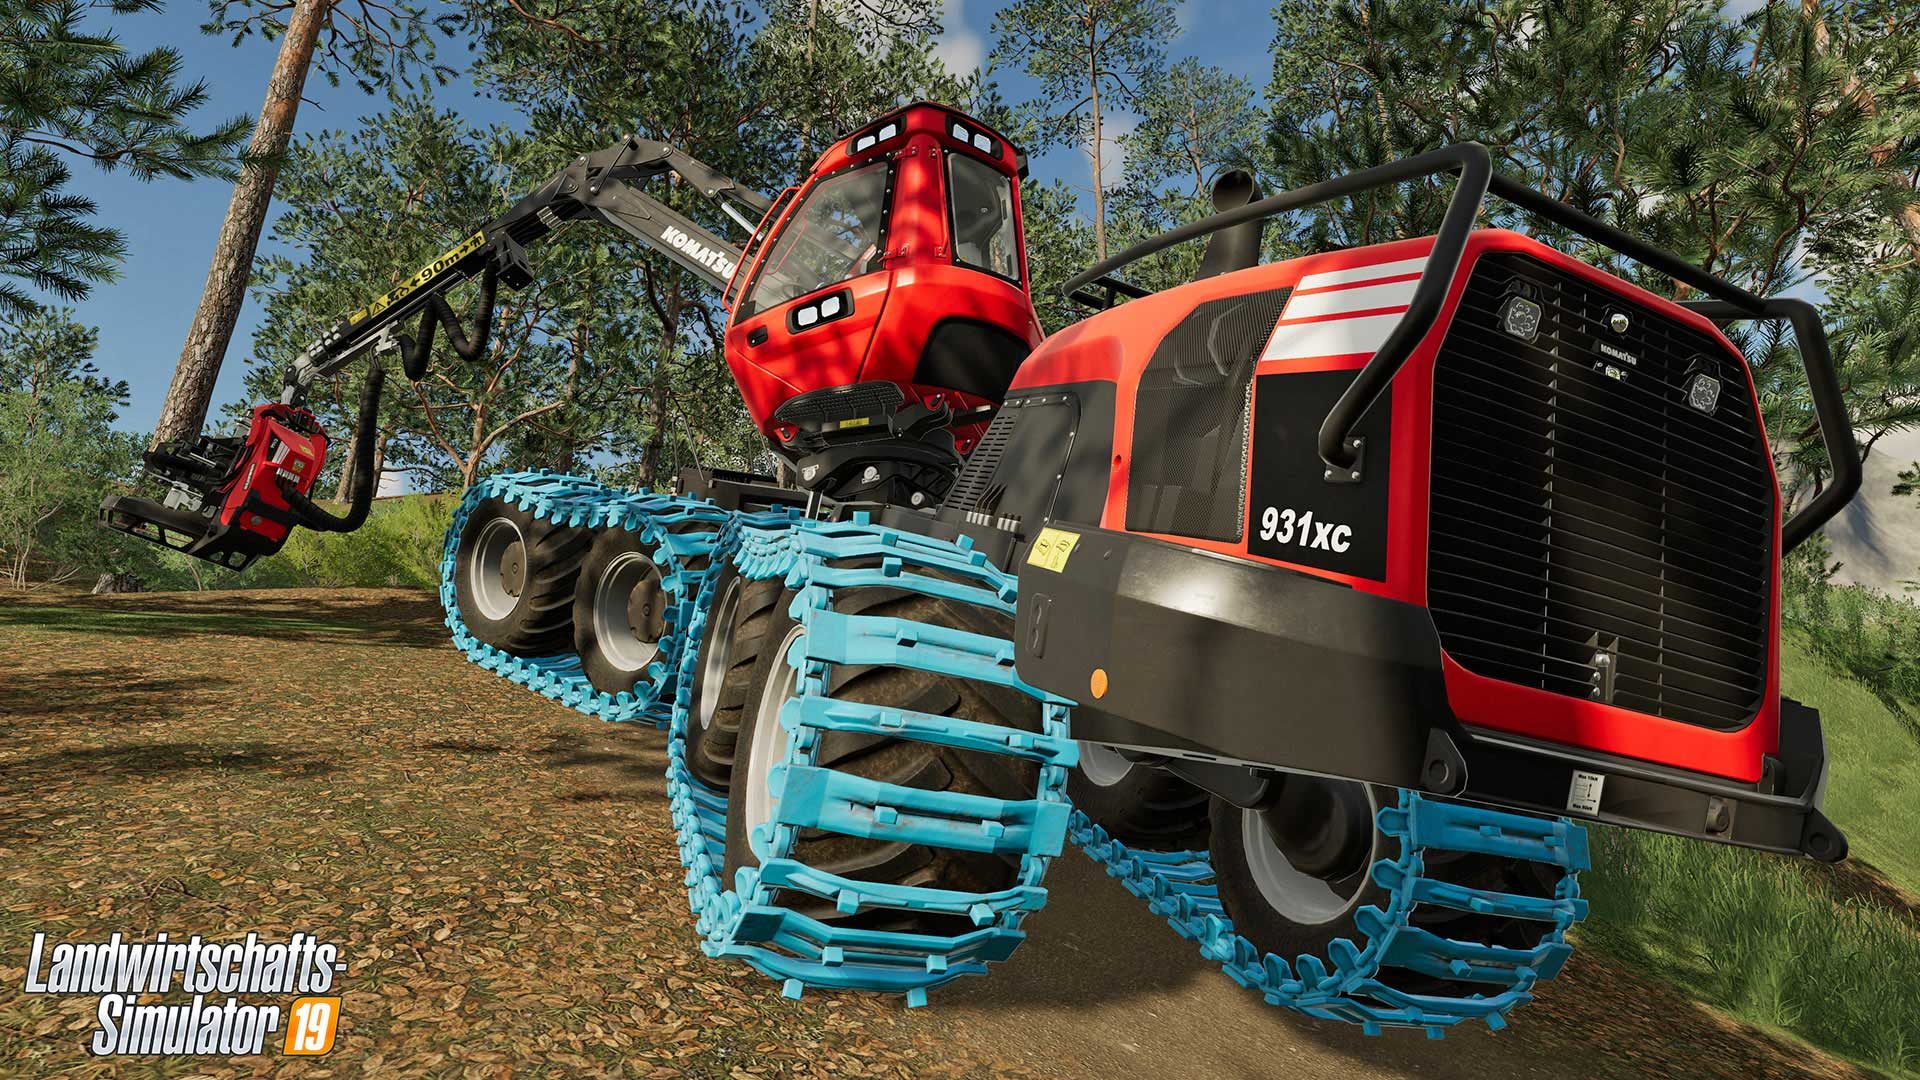 farming simulator 19 review